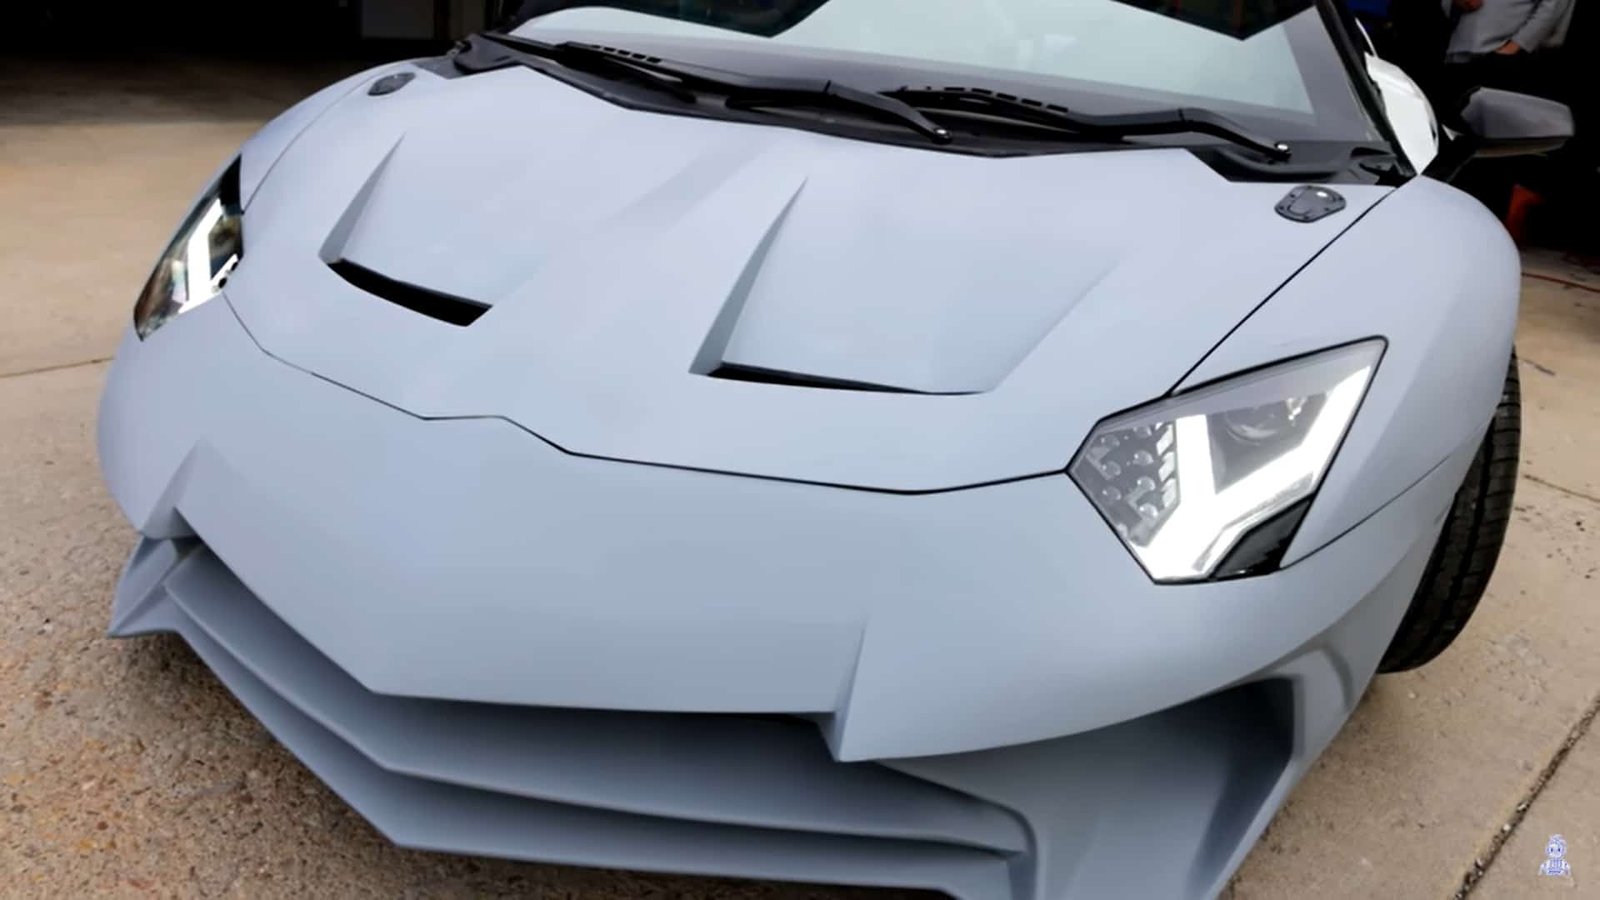 Frente do Lamborghini impresso em 3D